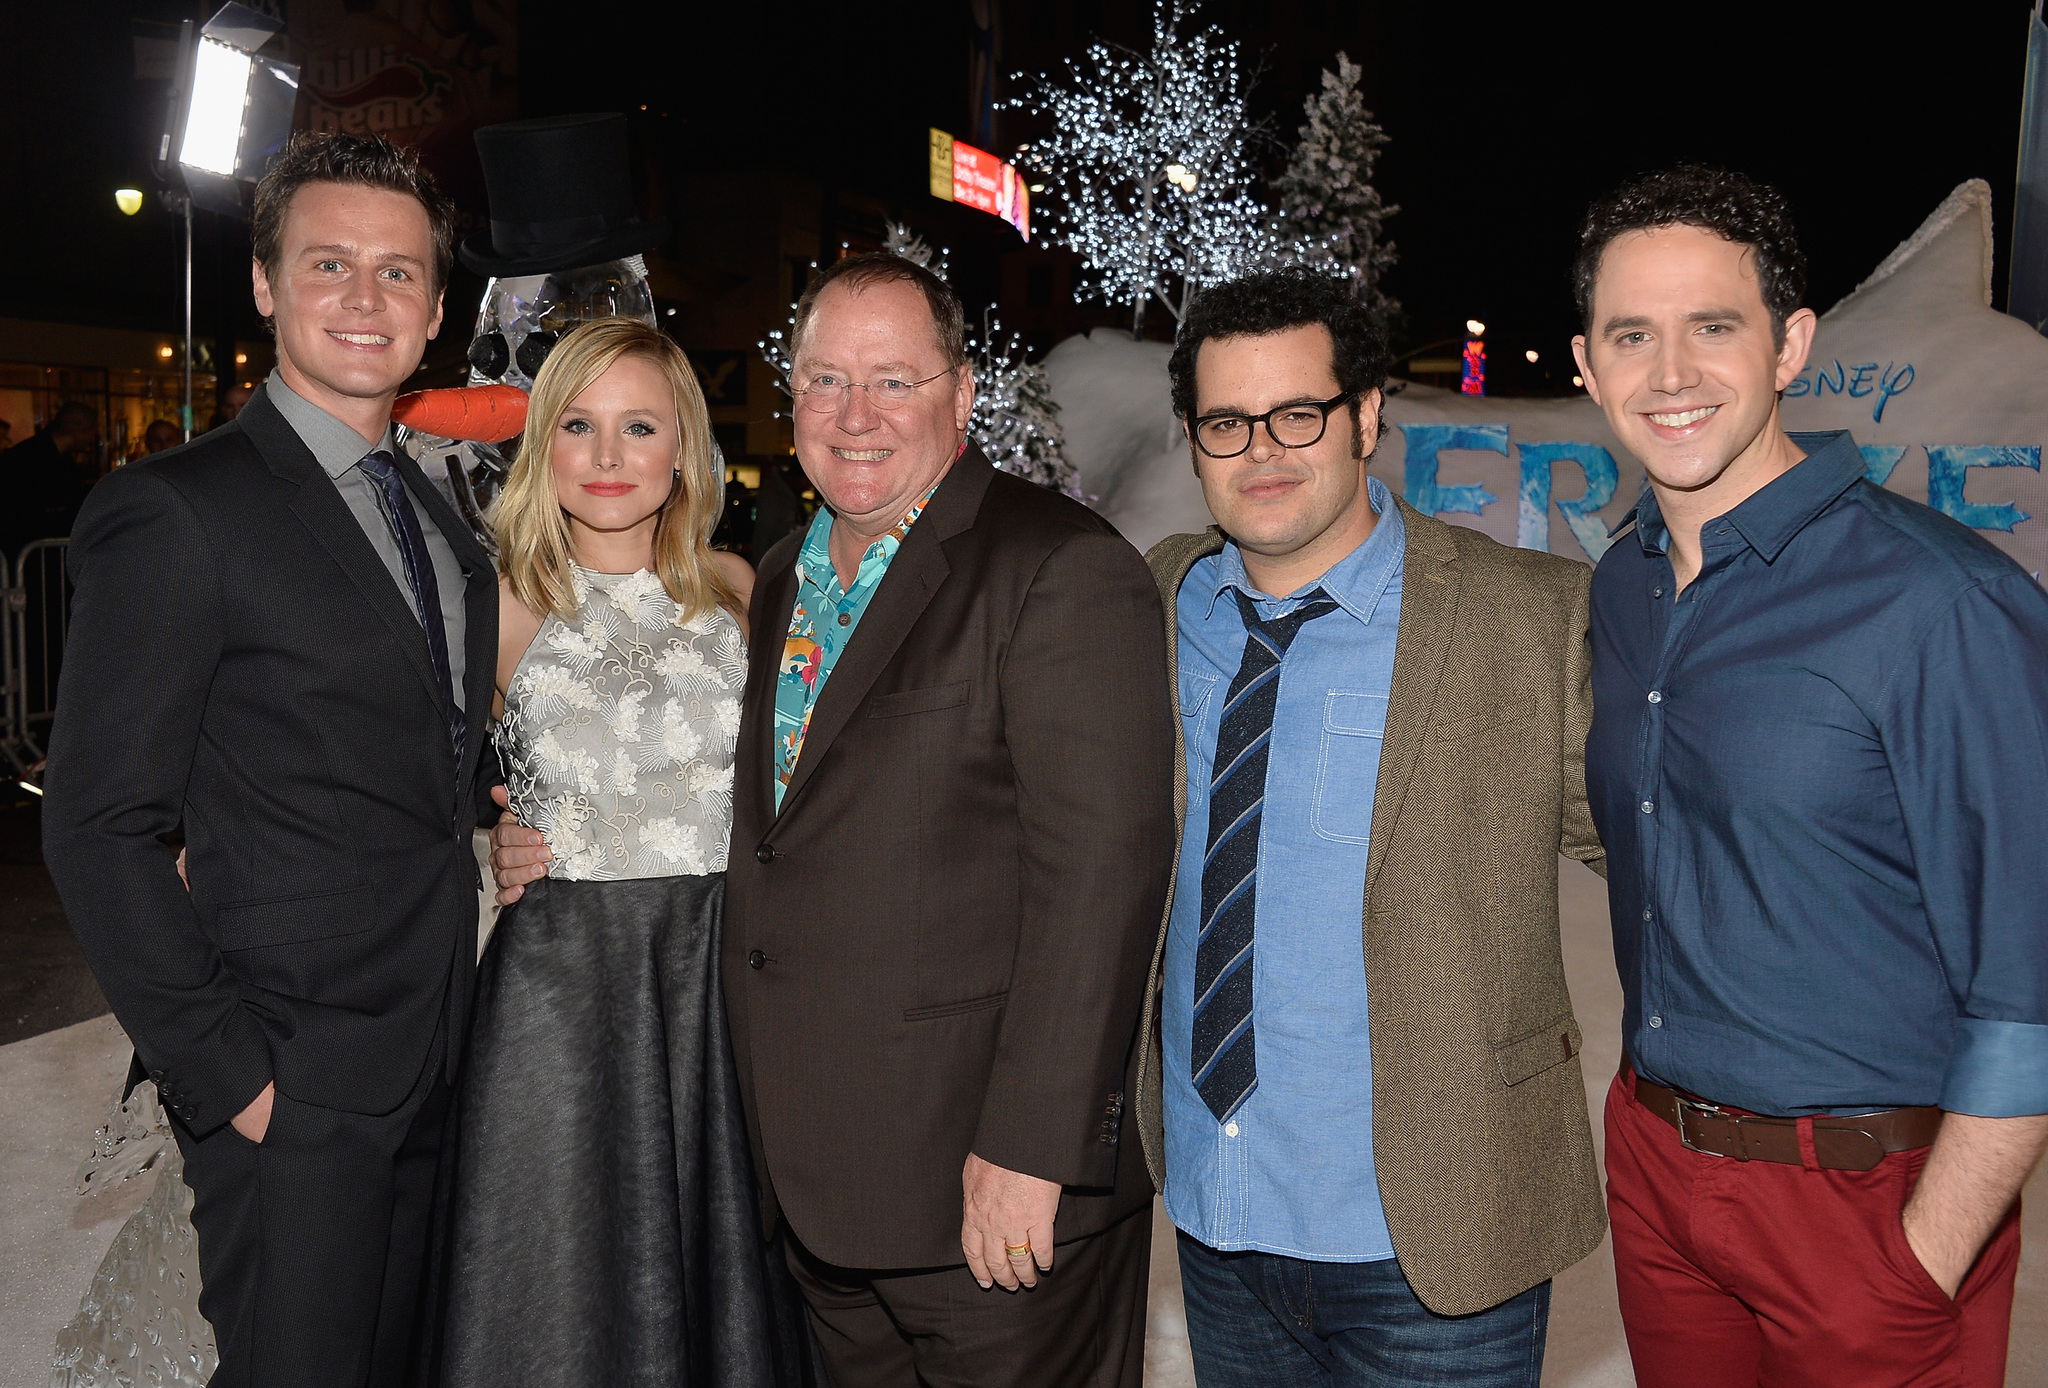 John Lasseter, Kristen Bell, Josh Gad and Santino Fontana at event of Ledo salis (2013)